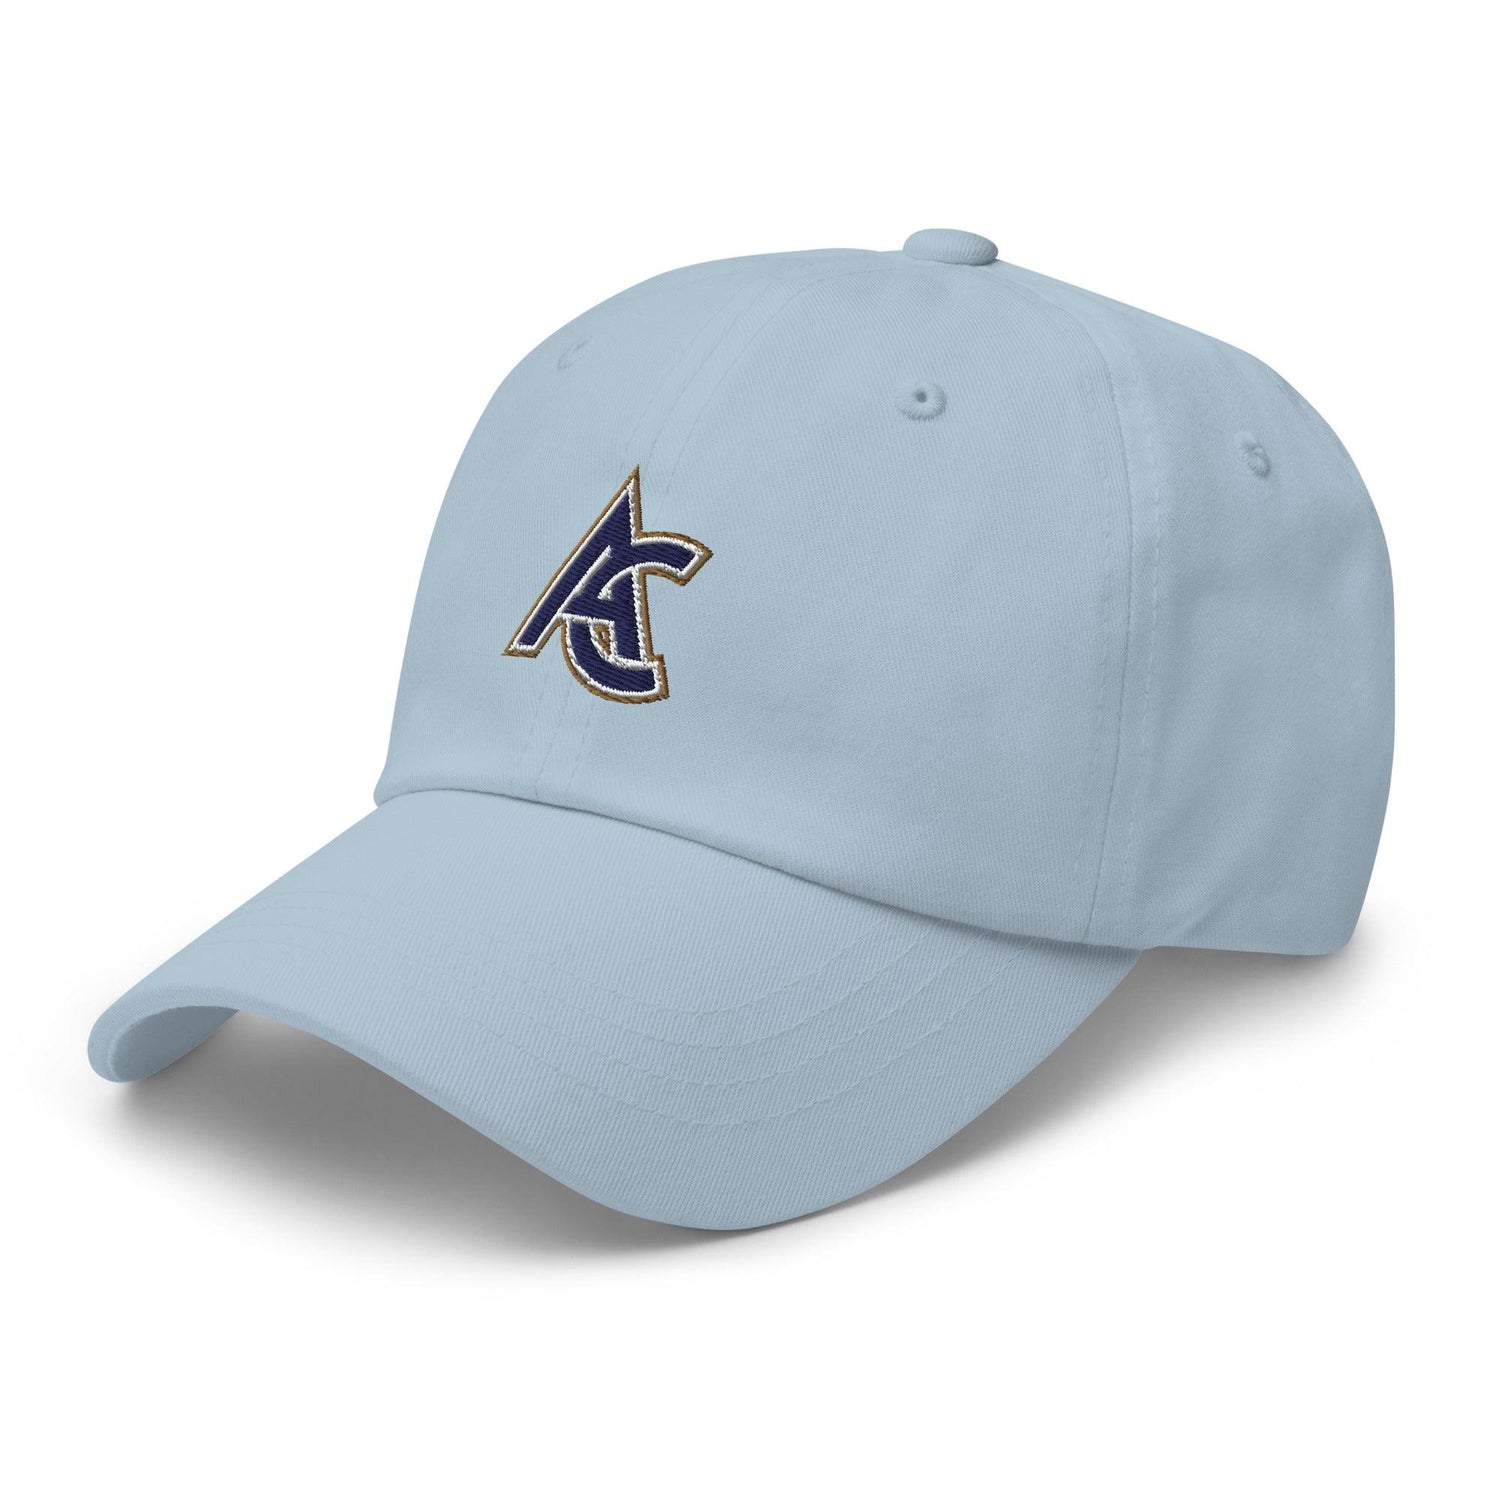 Austin Cox "Elite" hat - Fan Arch